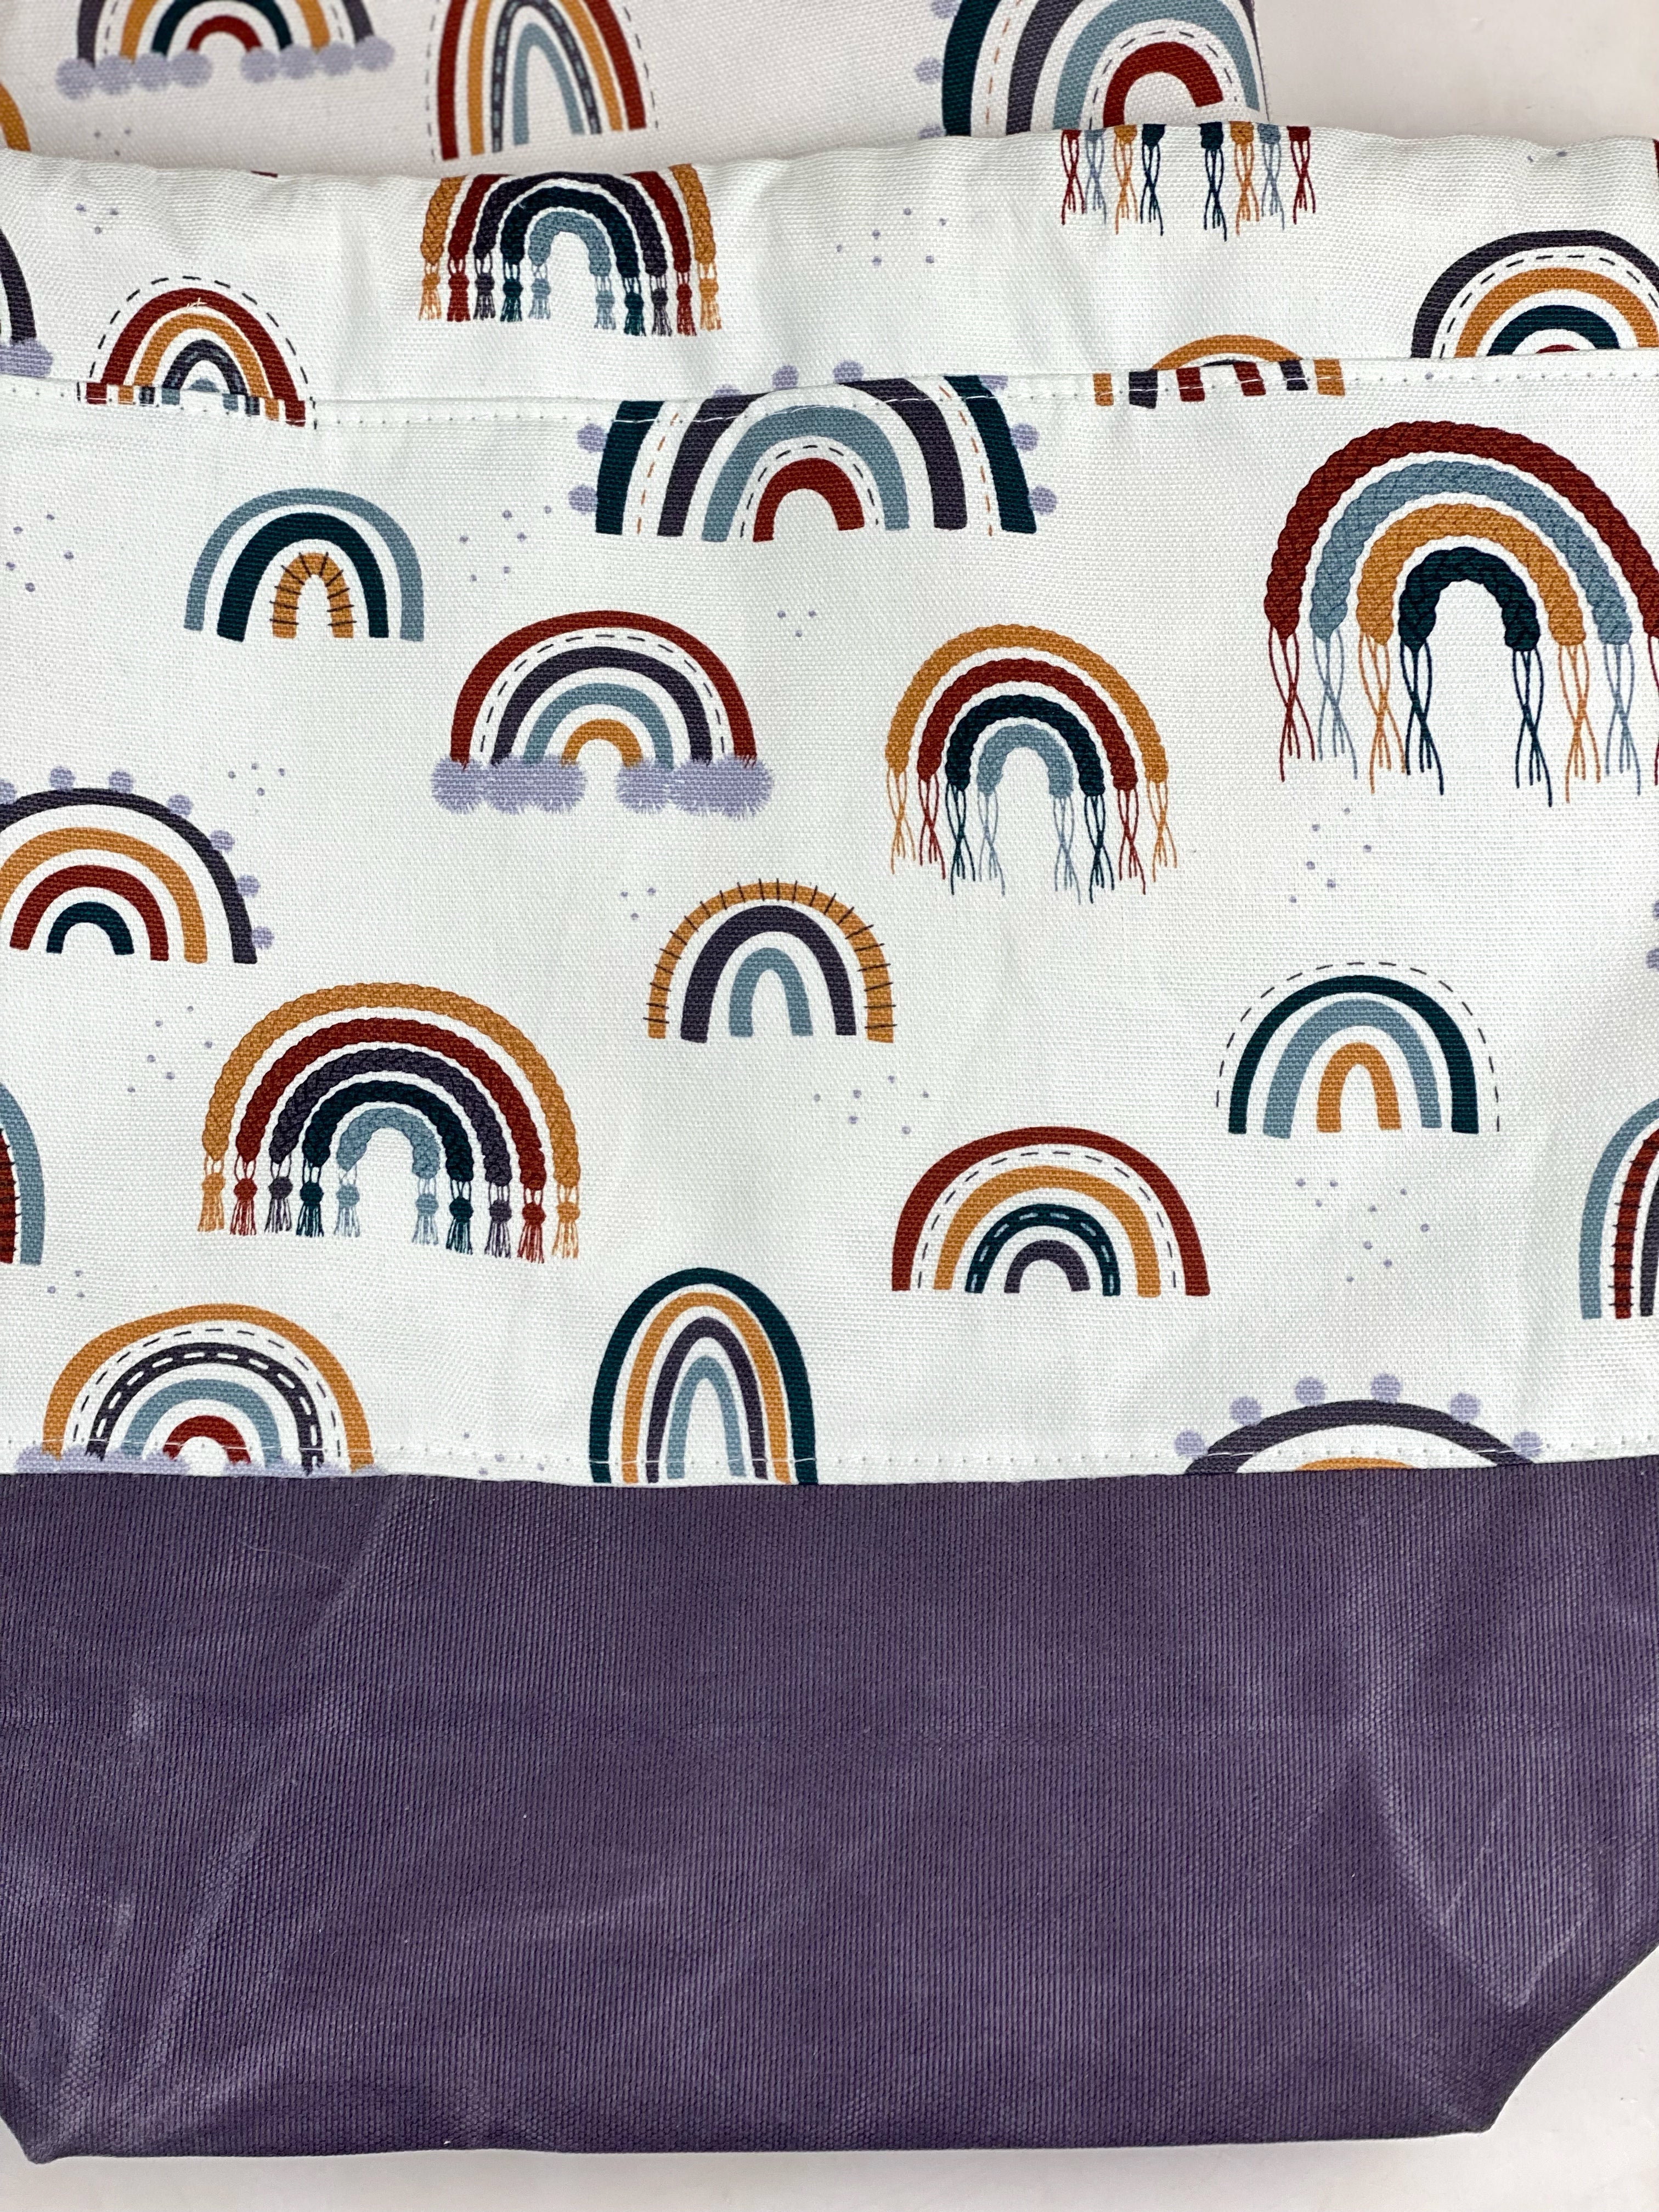 Rainbow Macrame Canvas Project Bag, Boho Style Duck Canvas Bag, Knit &  Crochet Drawstring Knitting Crocheting WIP